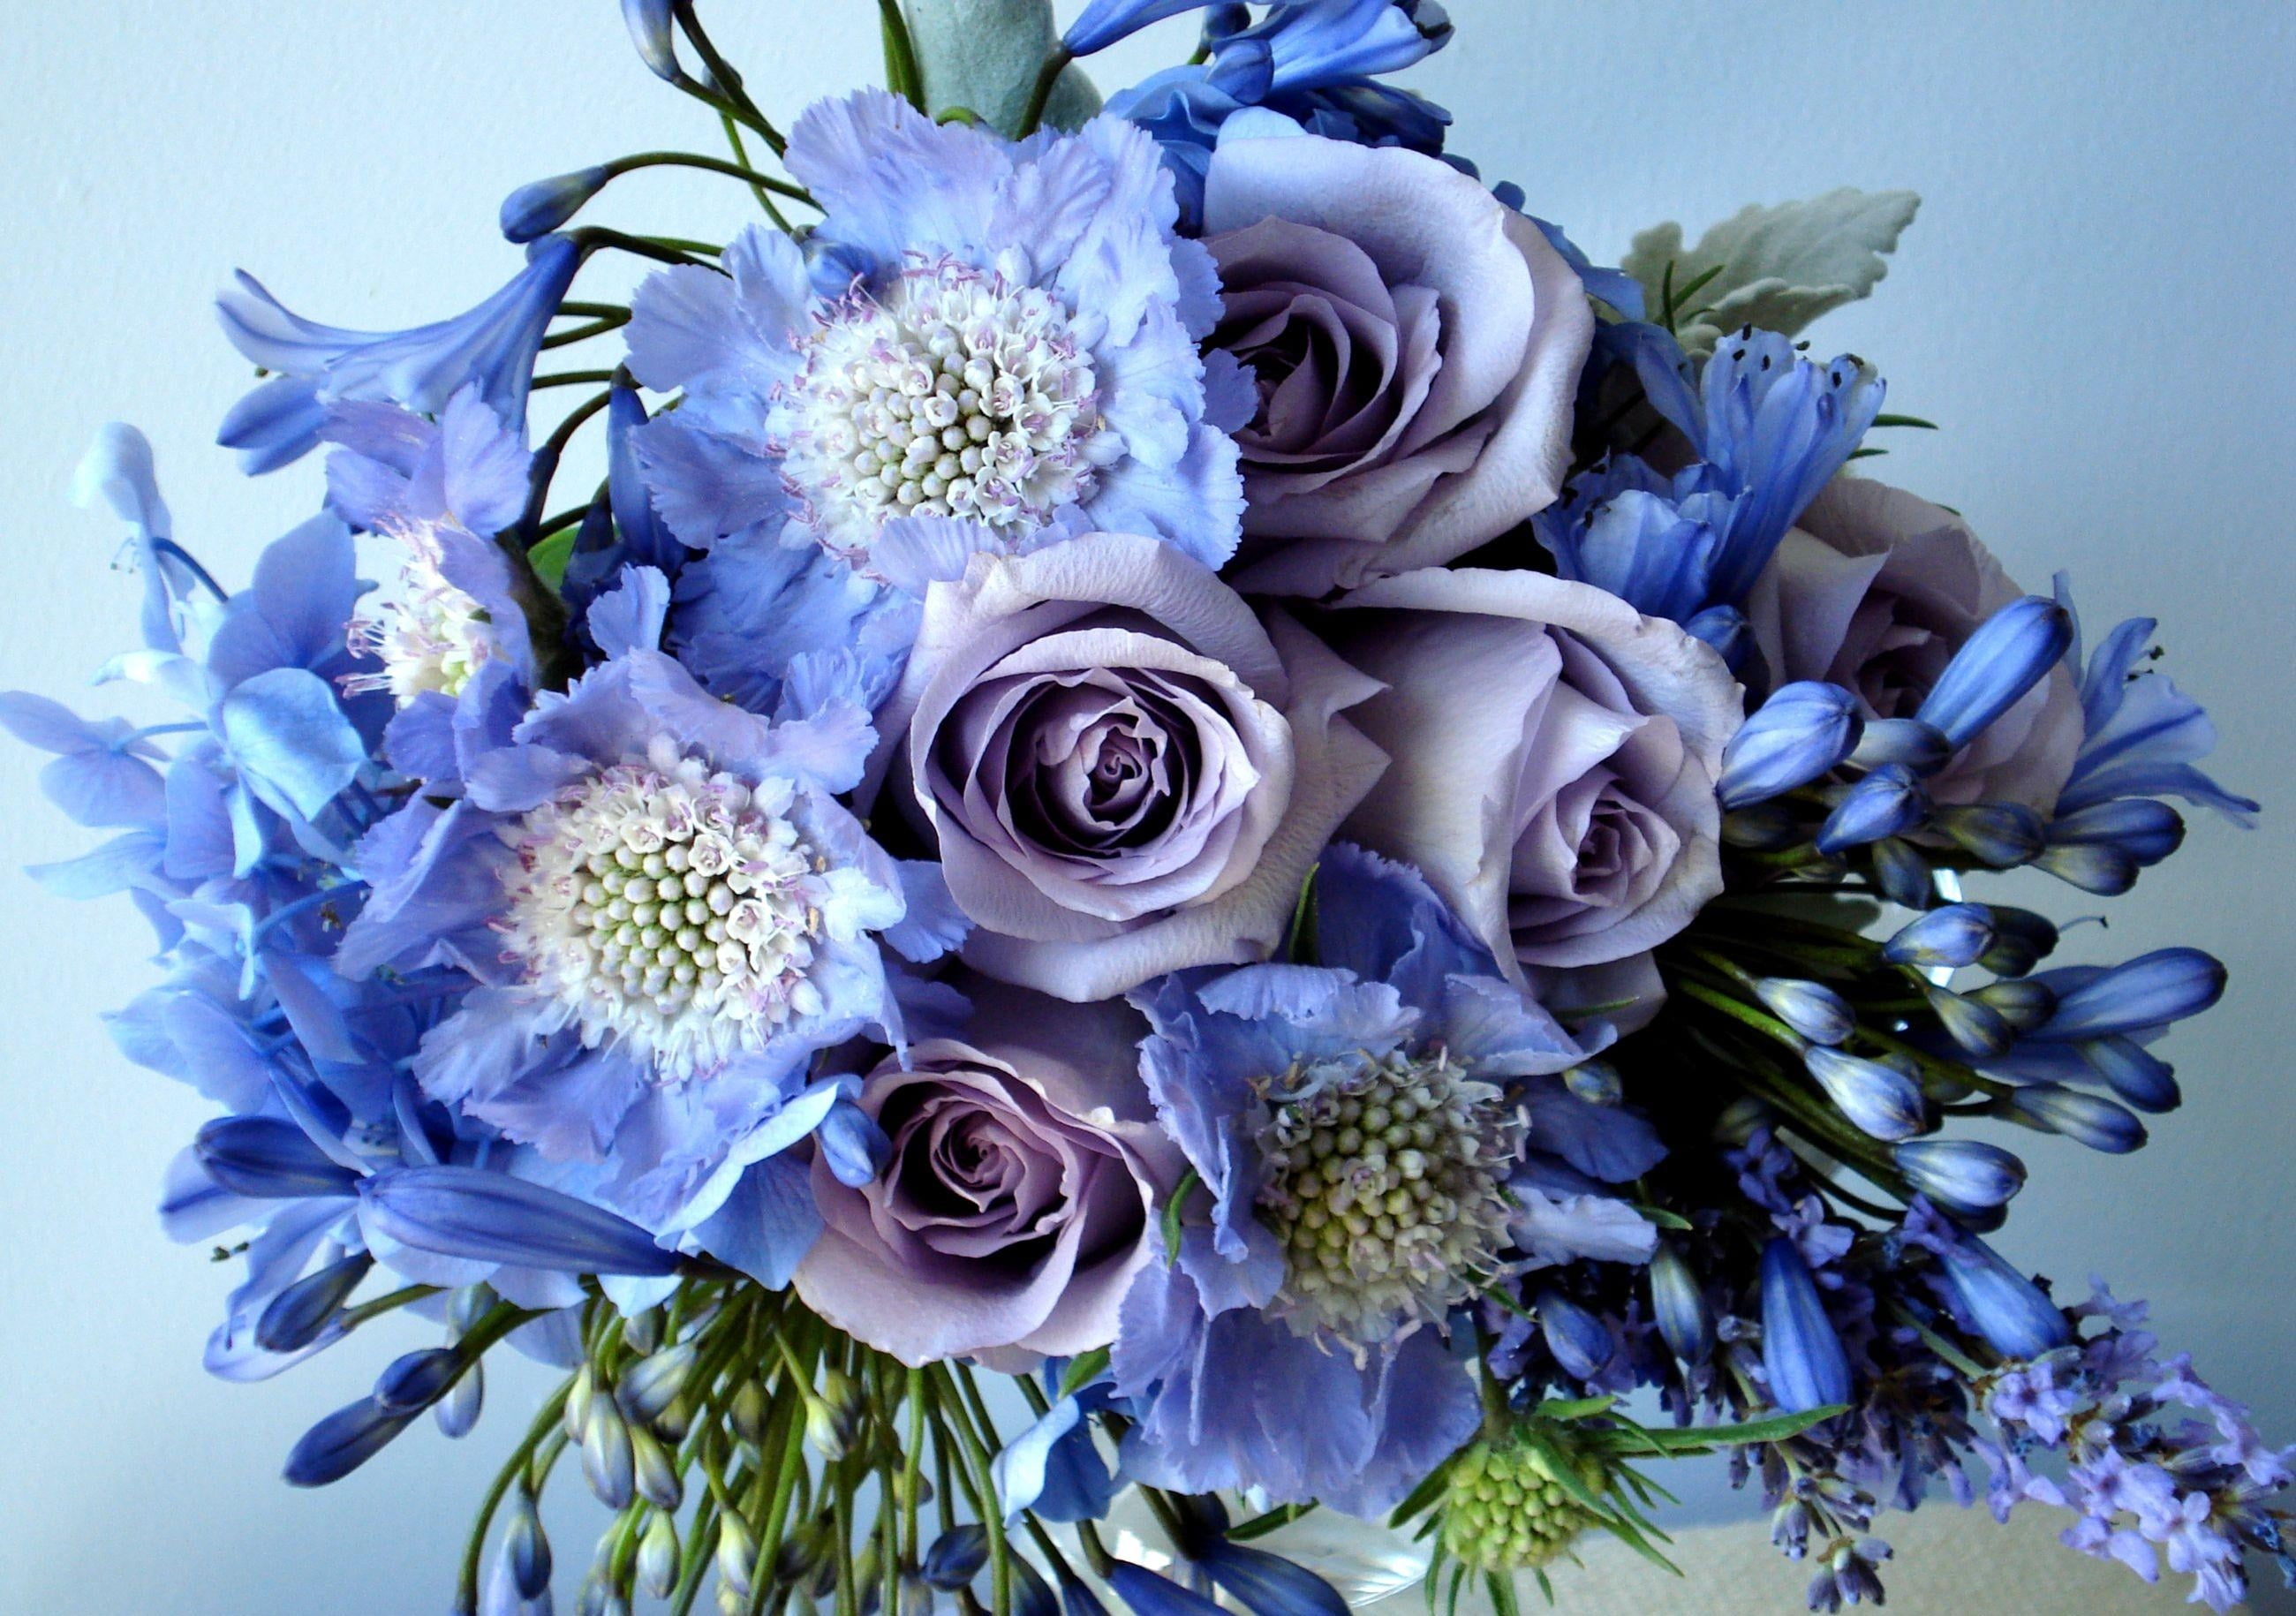 blue and purple flowers, roses, agapanthus, bouquet, decoration